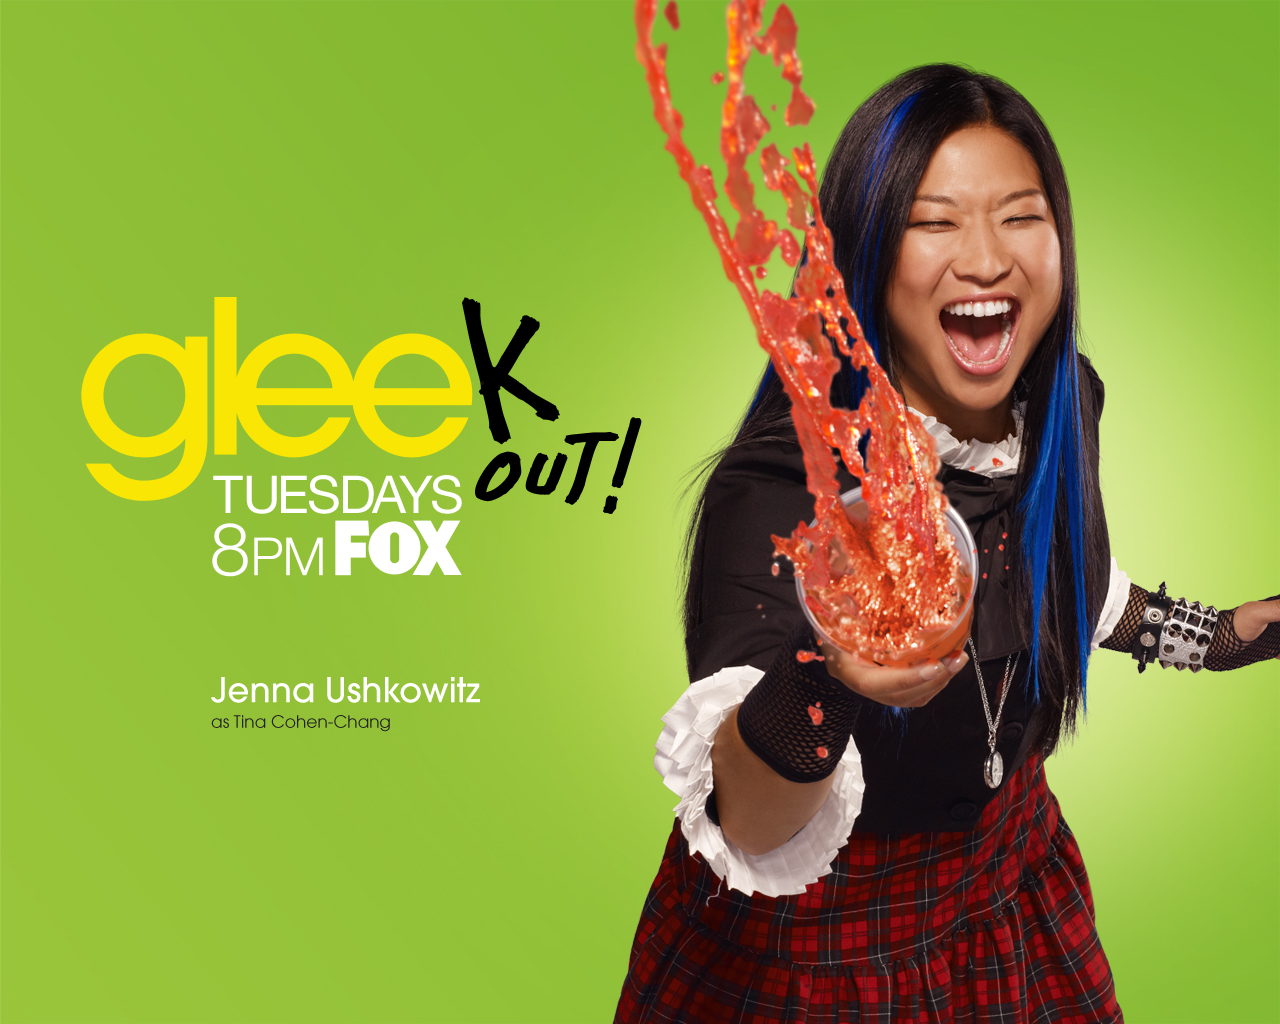 Descarga gratuita de fondo de pantalla para móvil de Series De Televisión, Glee.